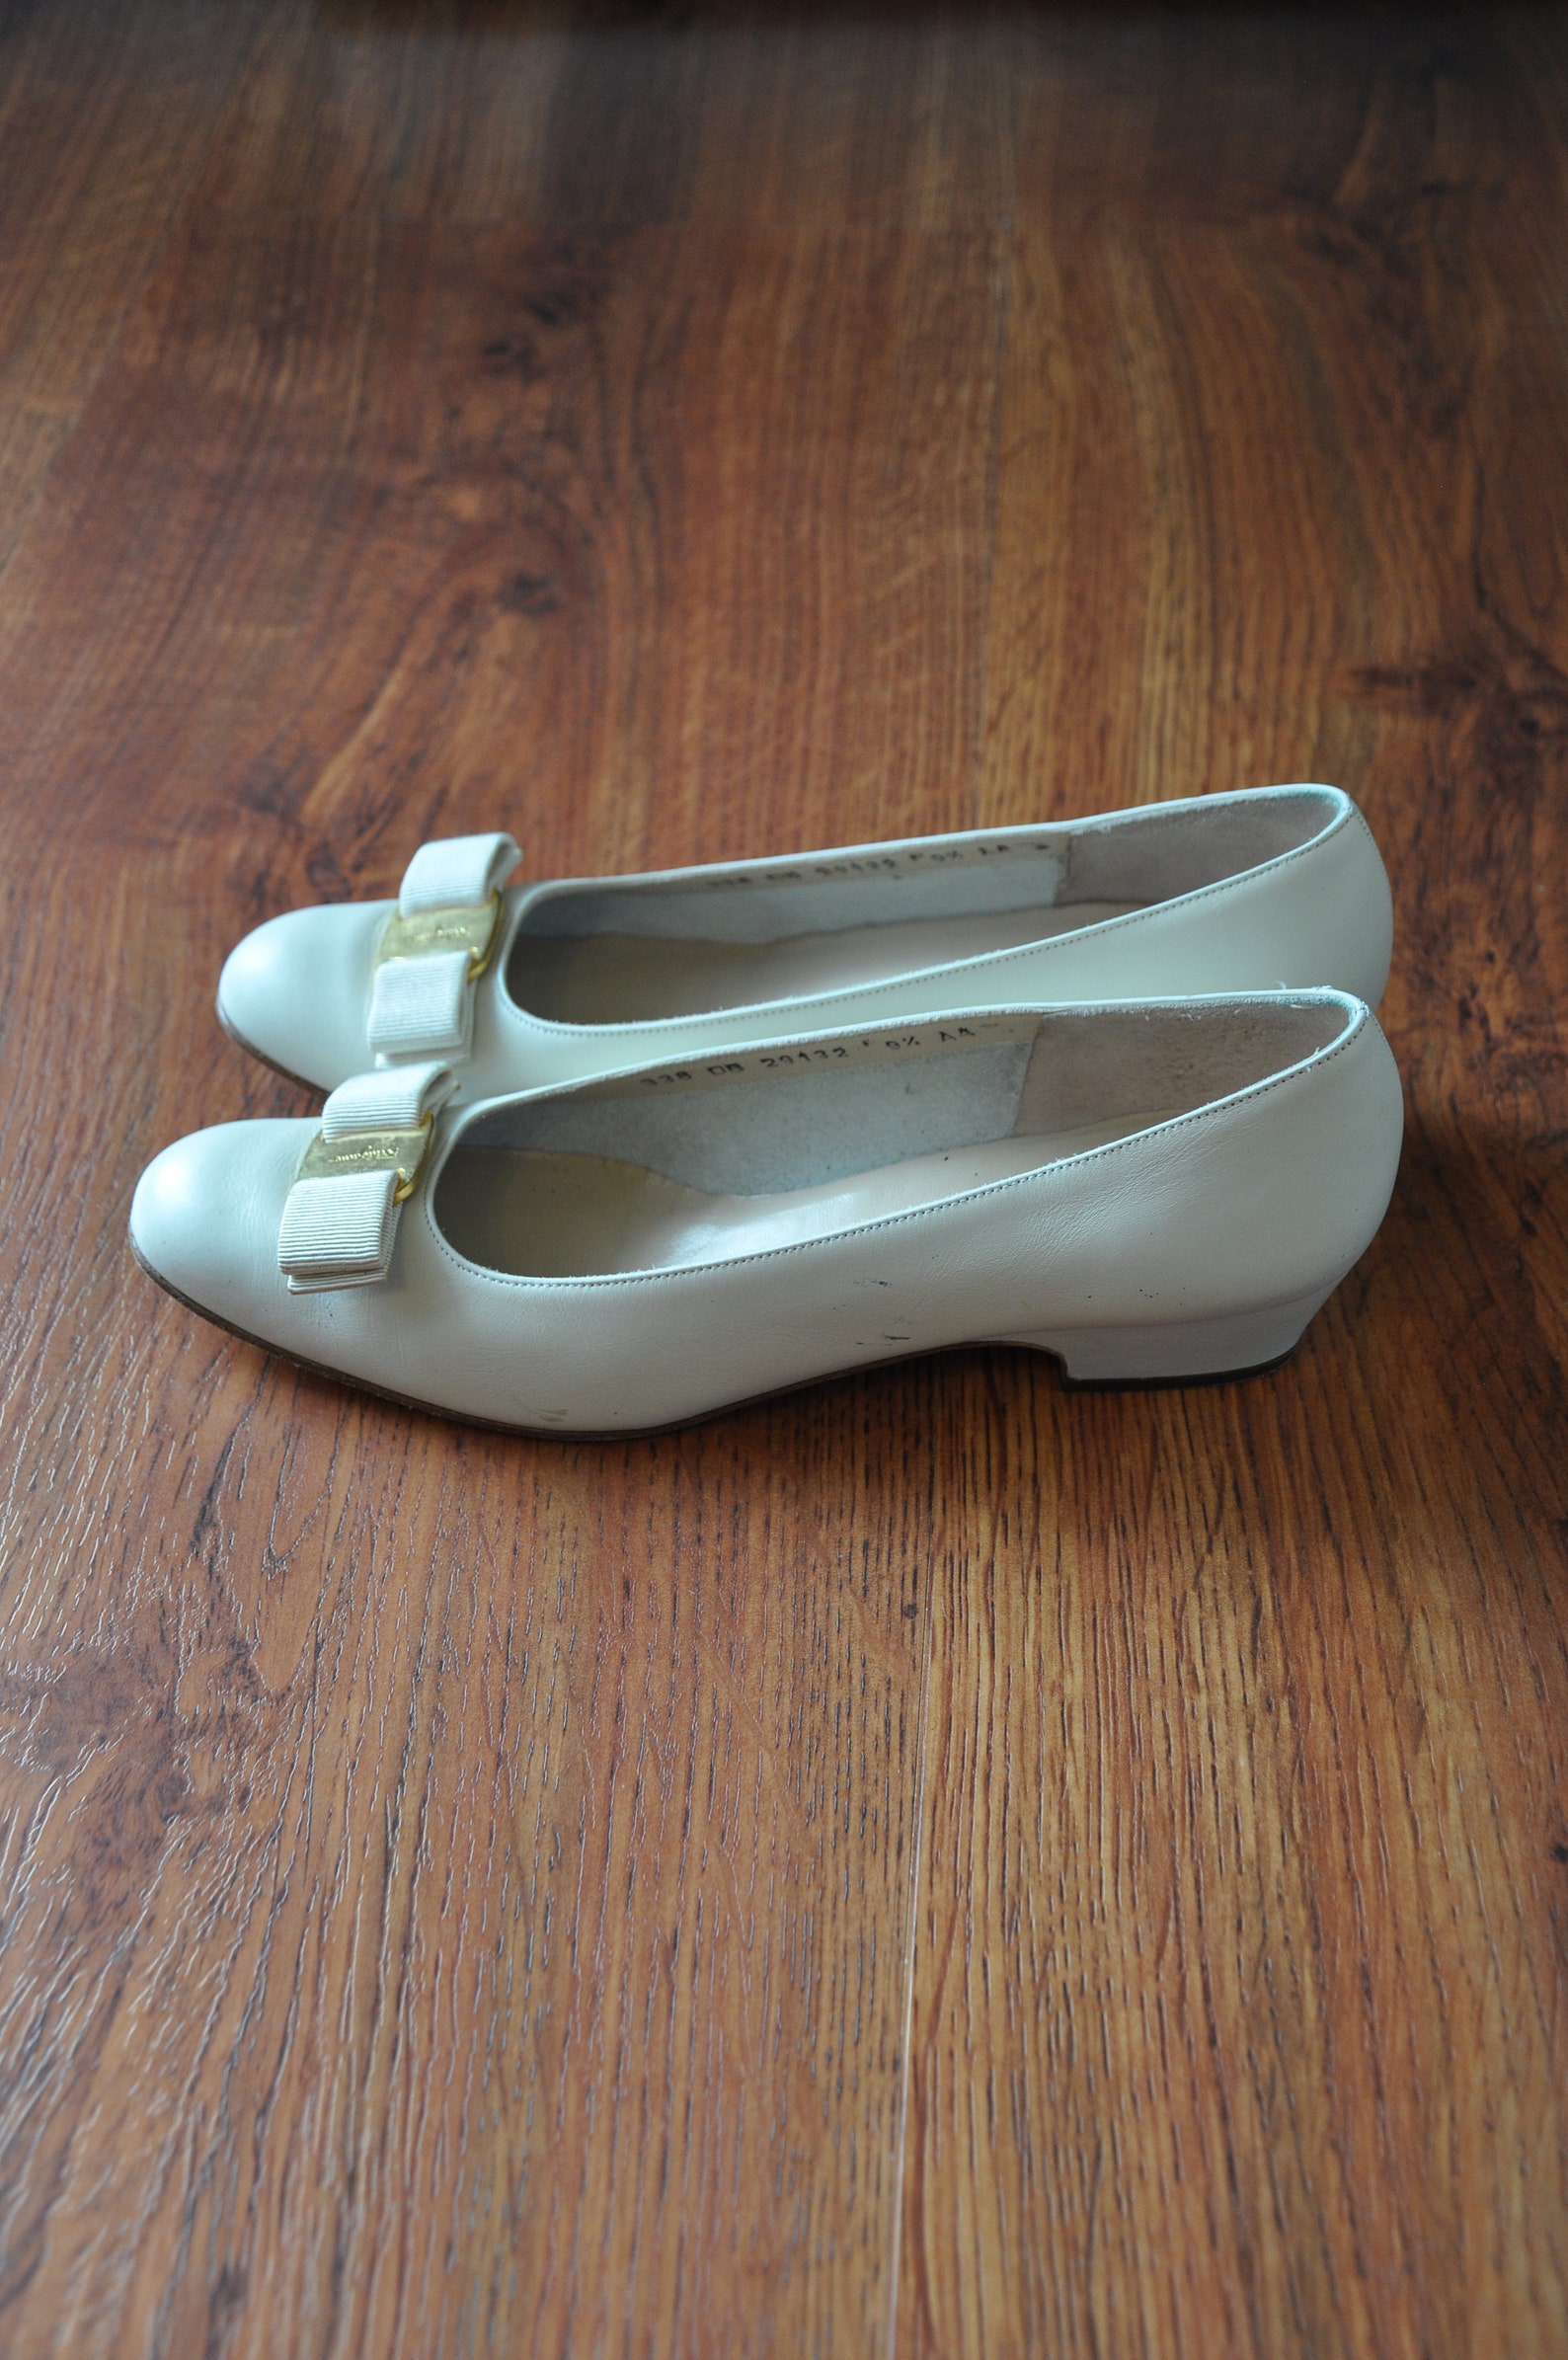 ferragamo vara pumps / ivory leather ballet shoes / classic bow slip on flats 9